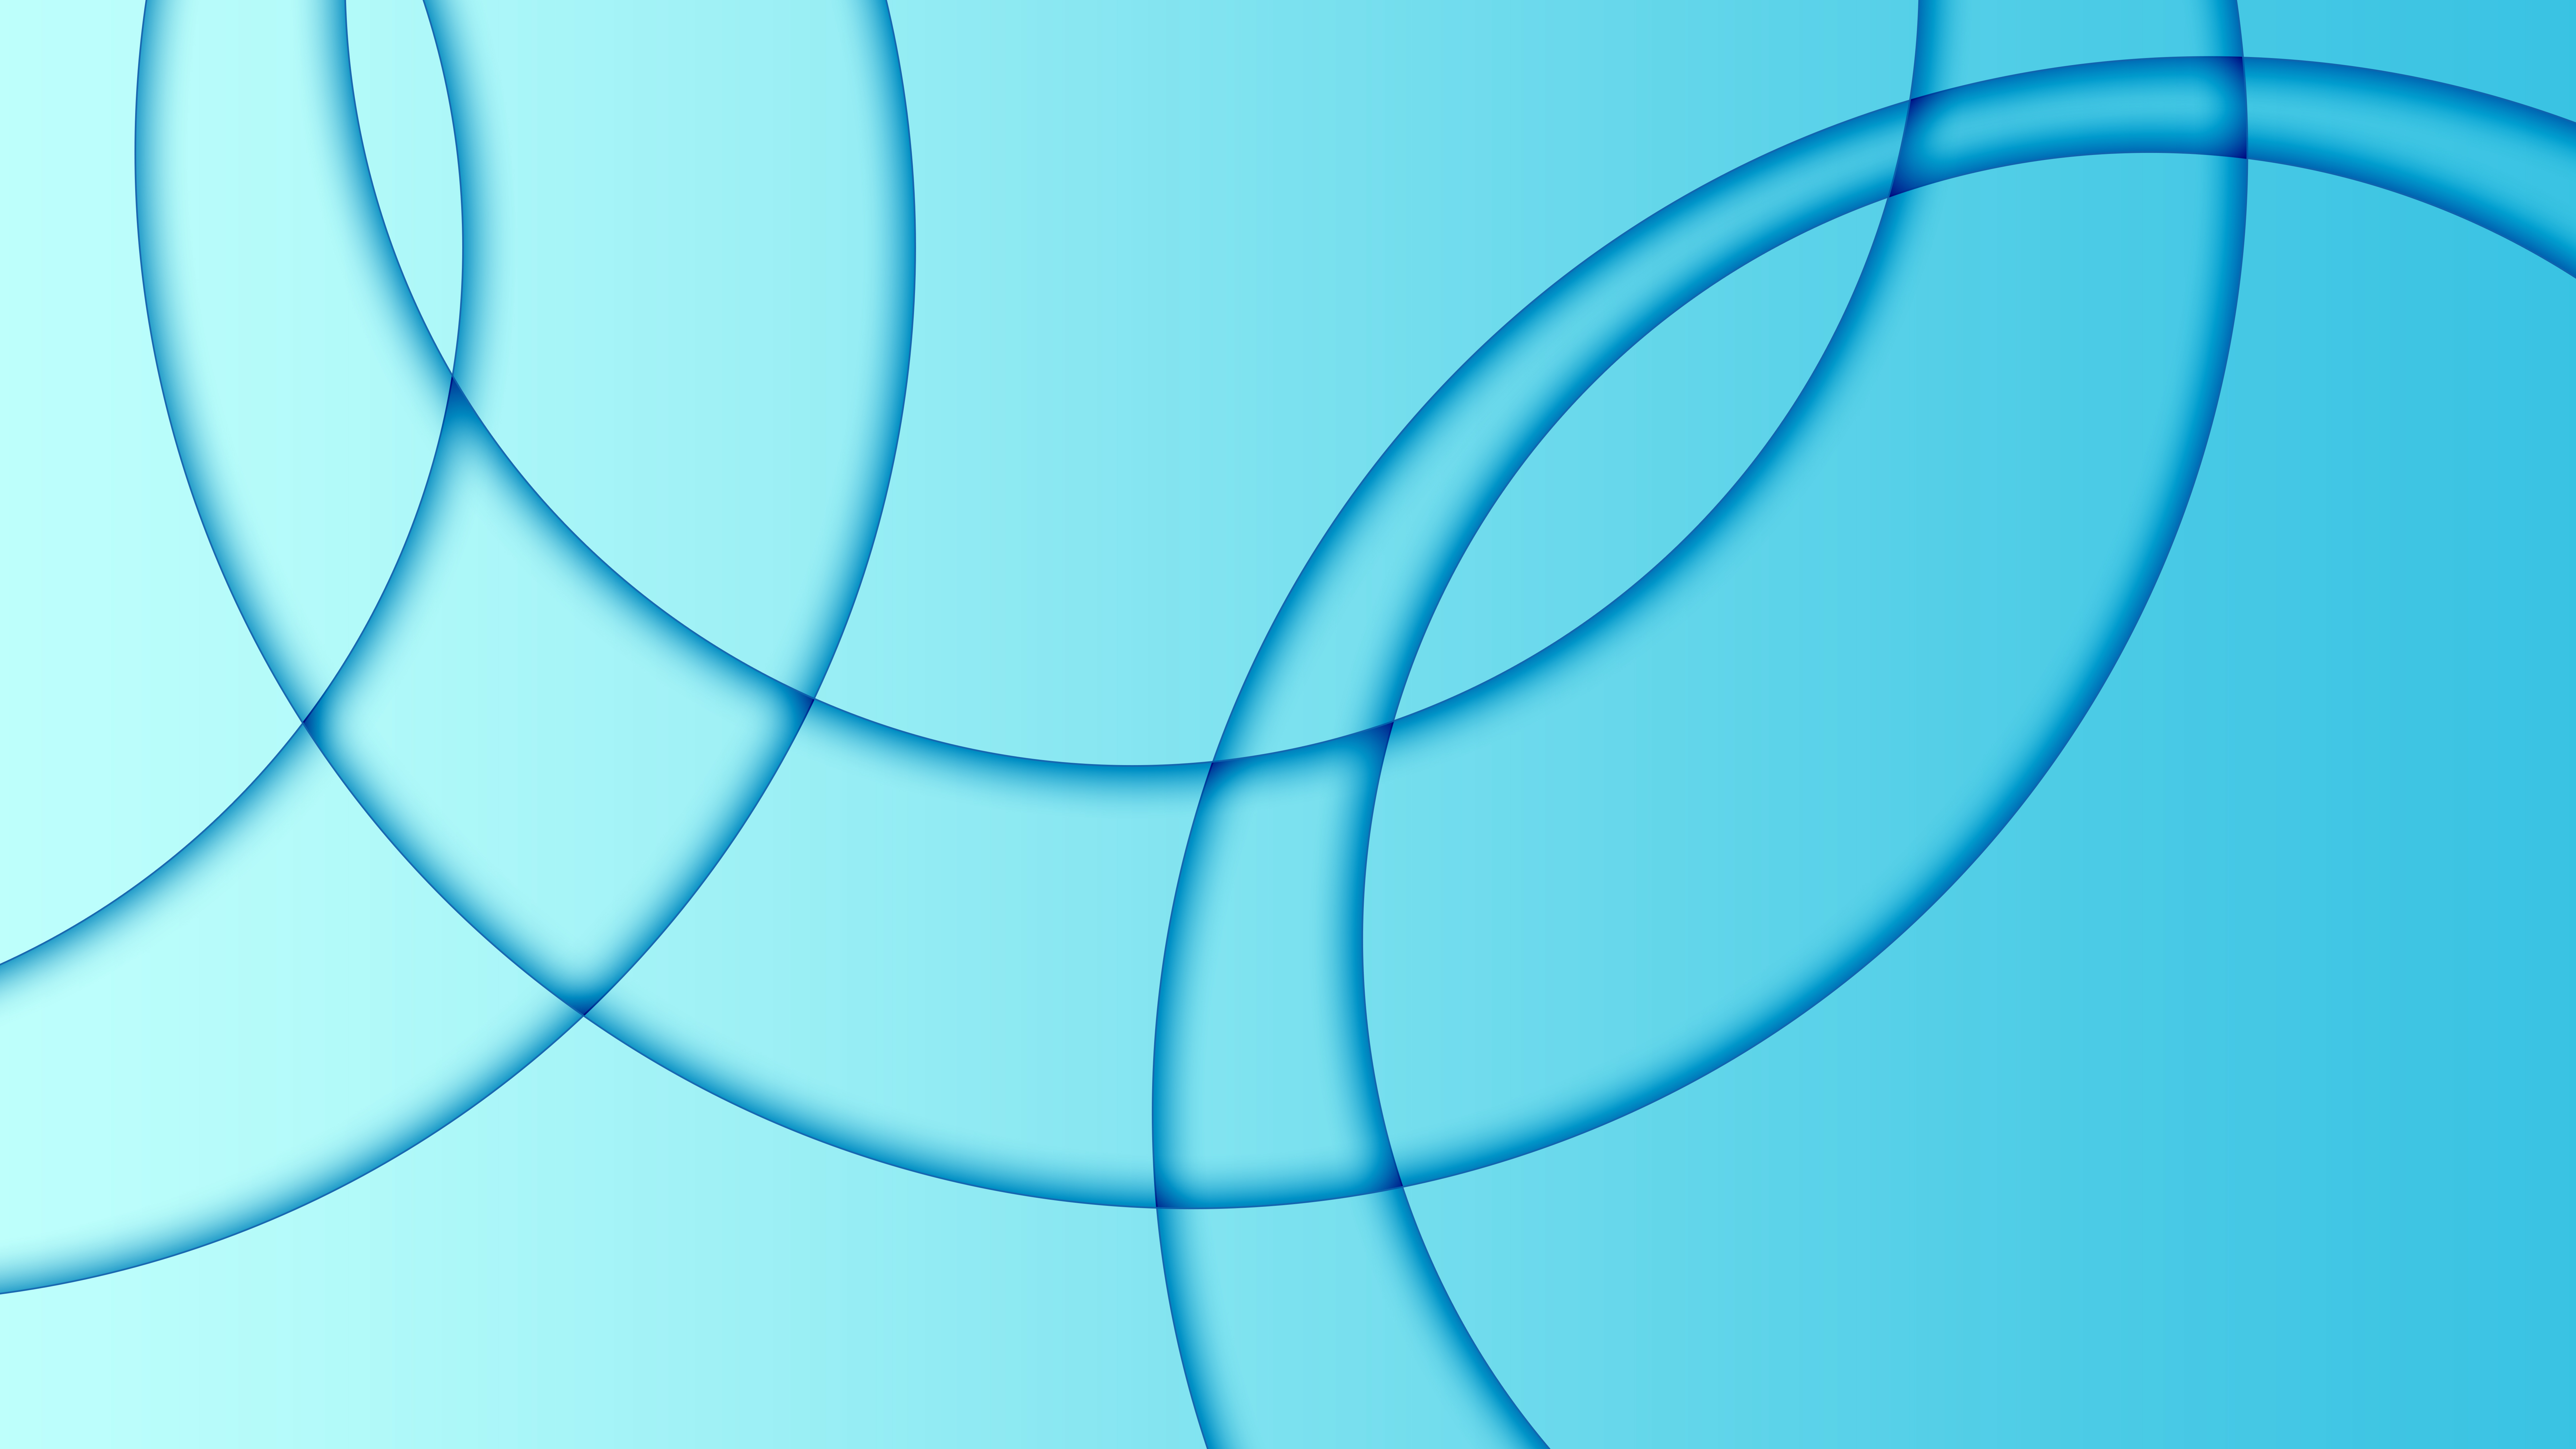 multiple-circles-abstract-blur-blue-8k-aq.jpg